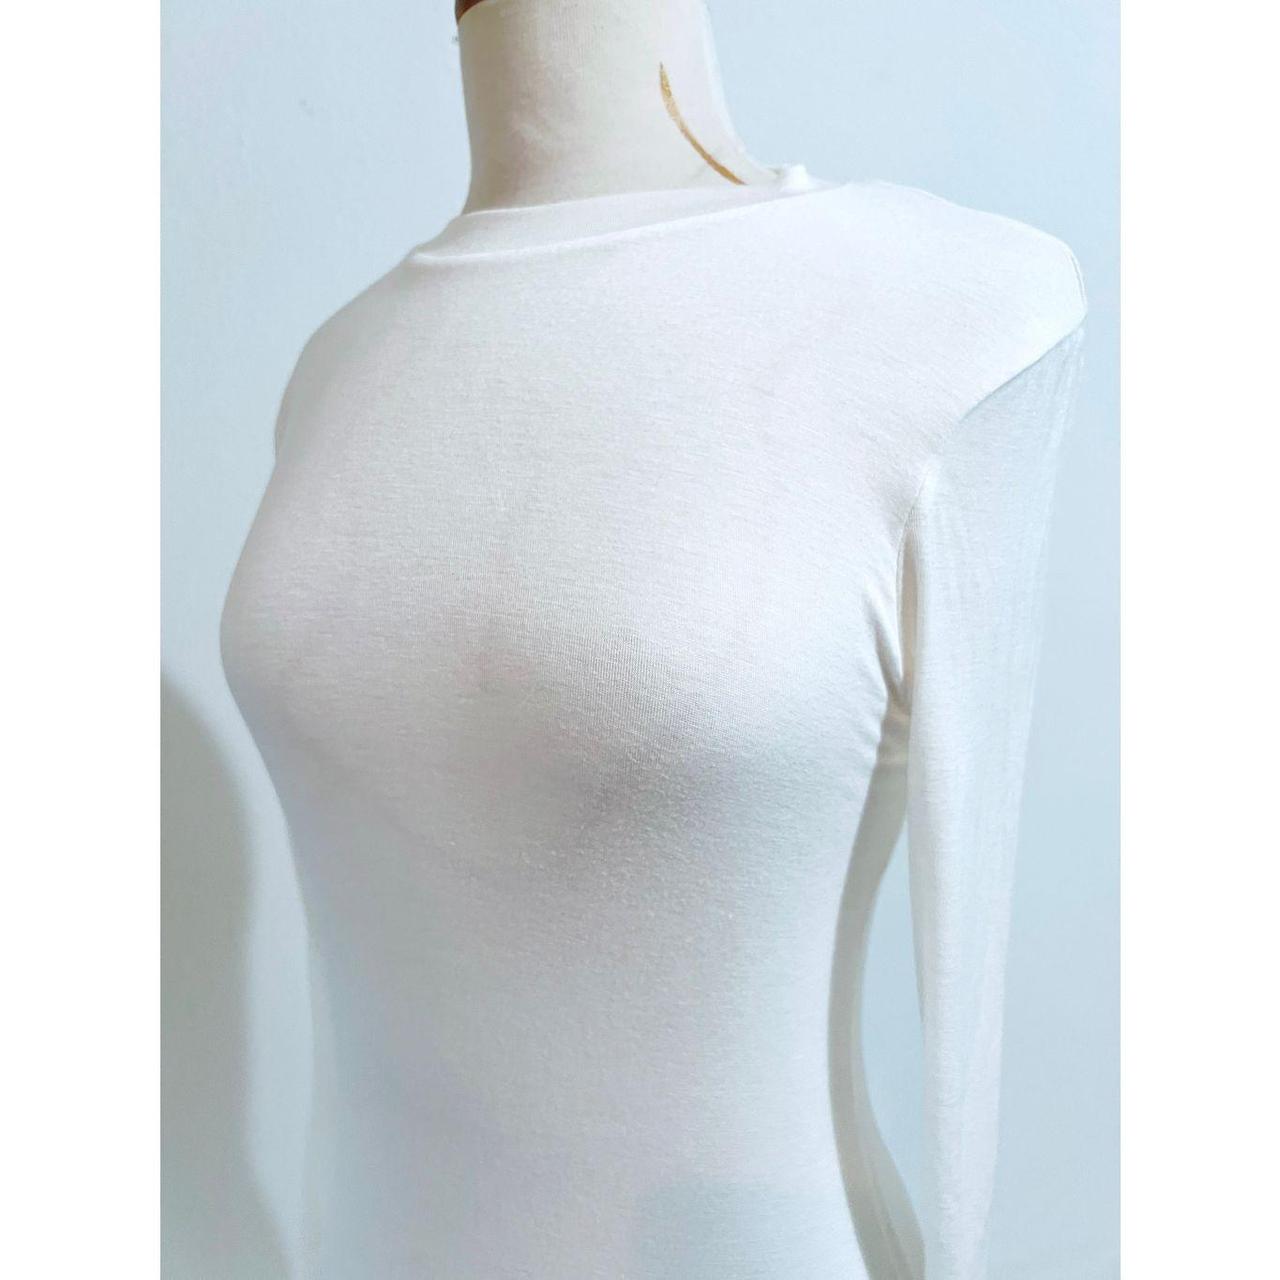 Product Image 2 - Fashion Nova White Bodycon Dress
✨✨✨✨✨✨
Simple